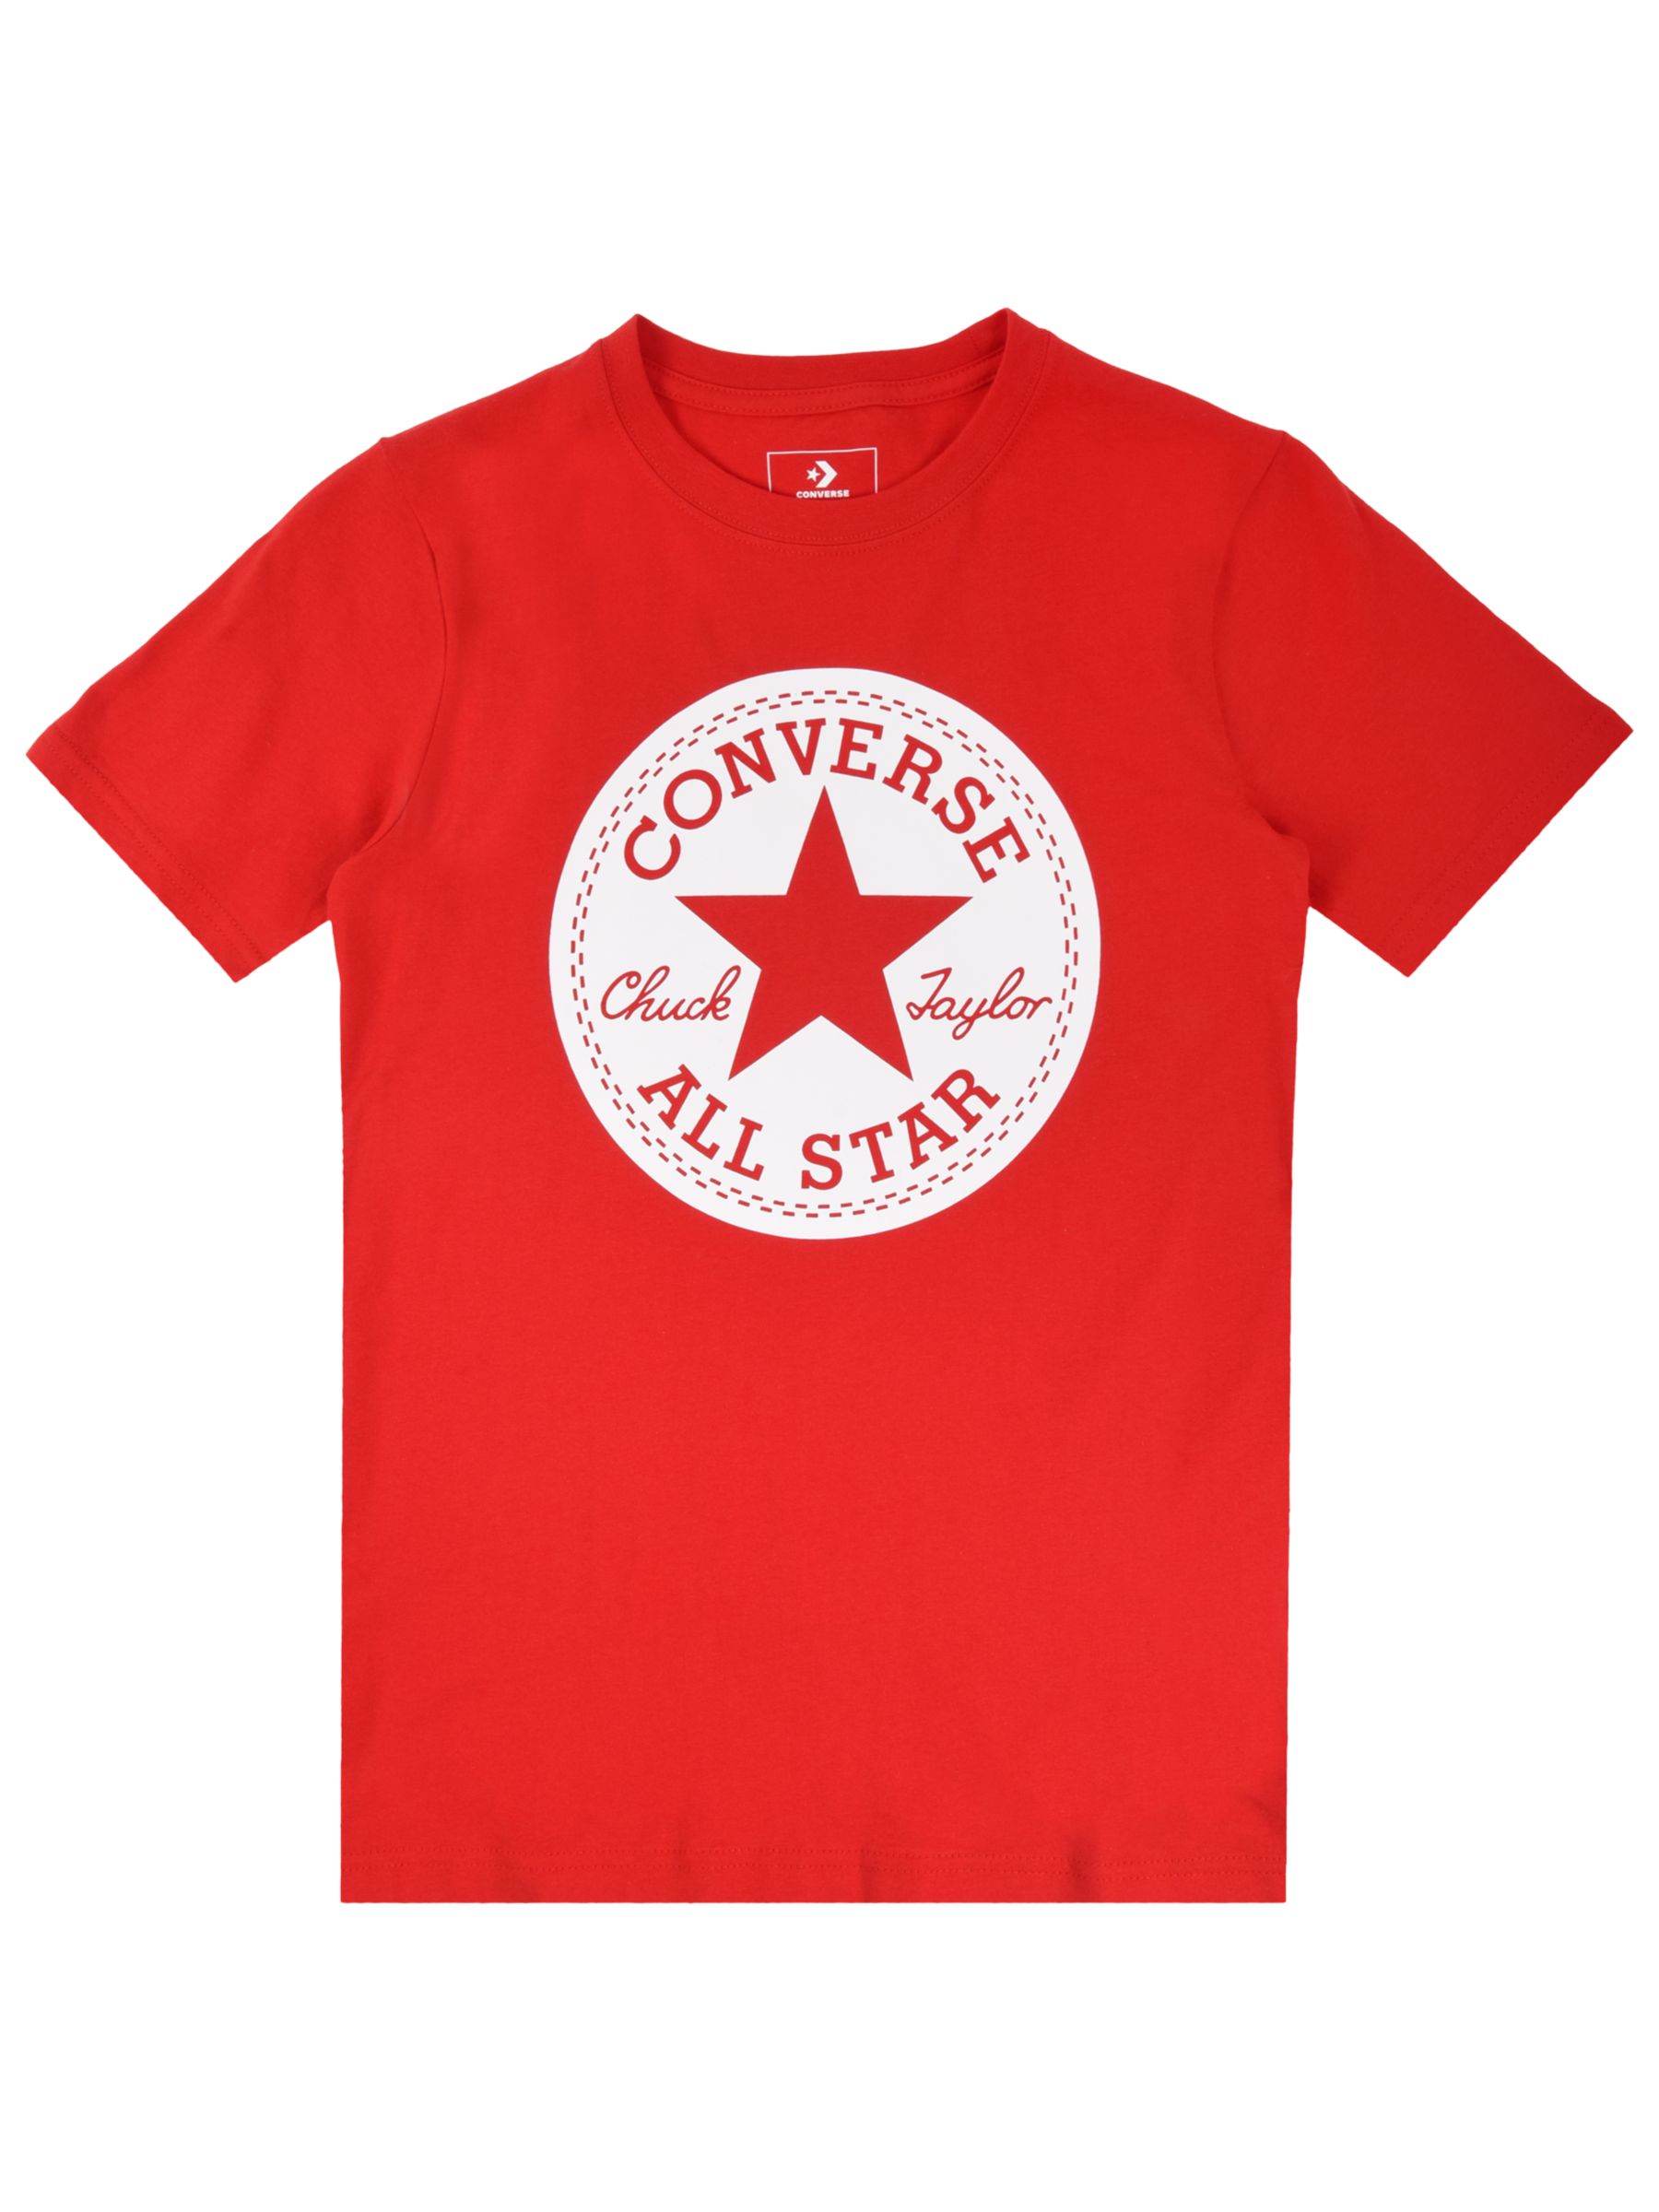 converse shirts